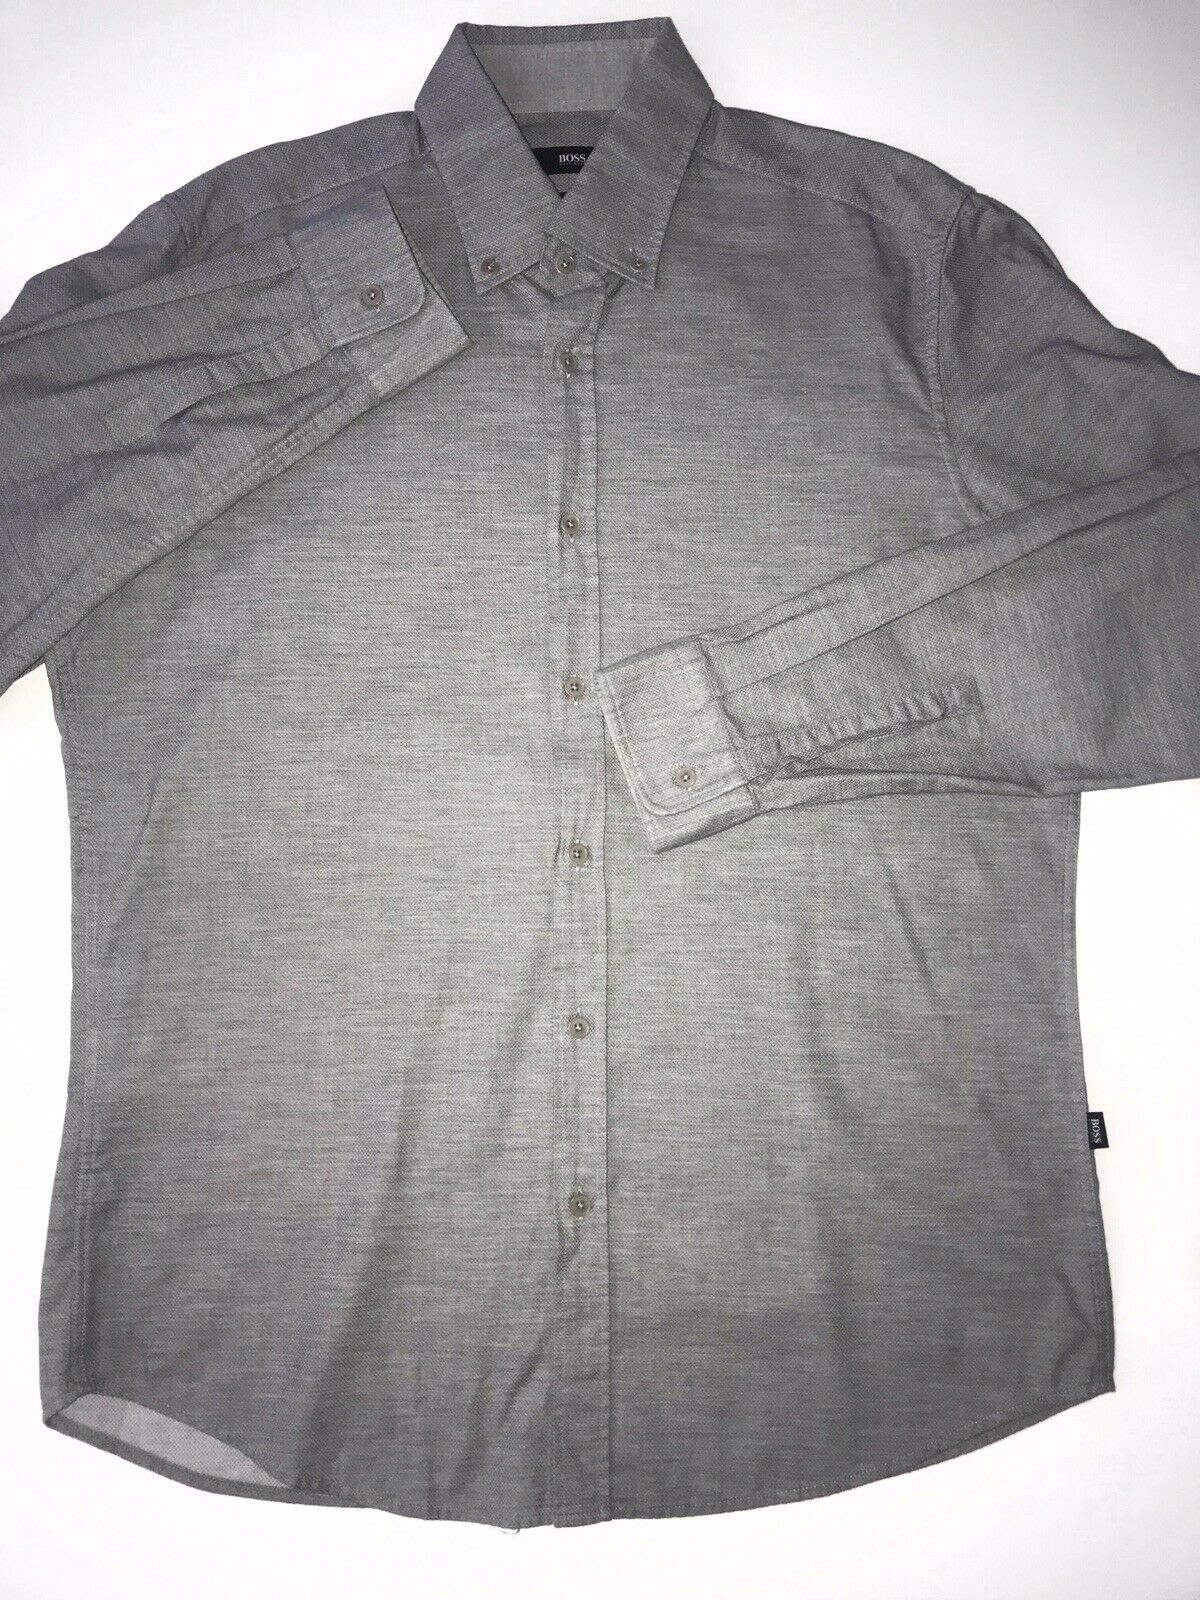 NWT $165 Hugo BossLeonard2 Mens Regular Fit Cotton Gray Dress Shirt XL